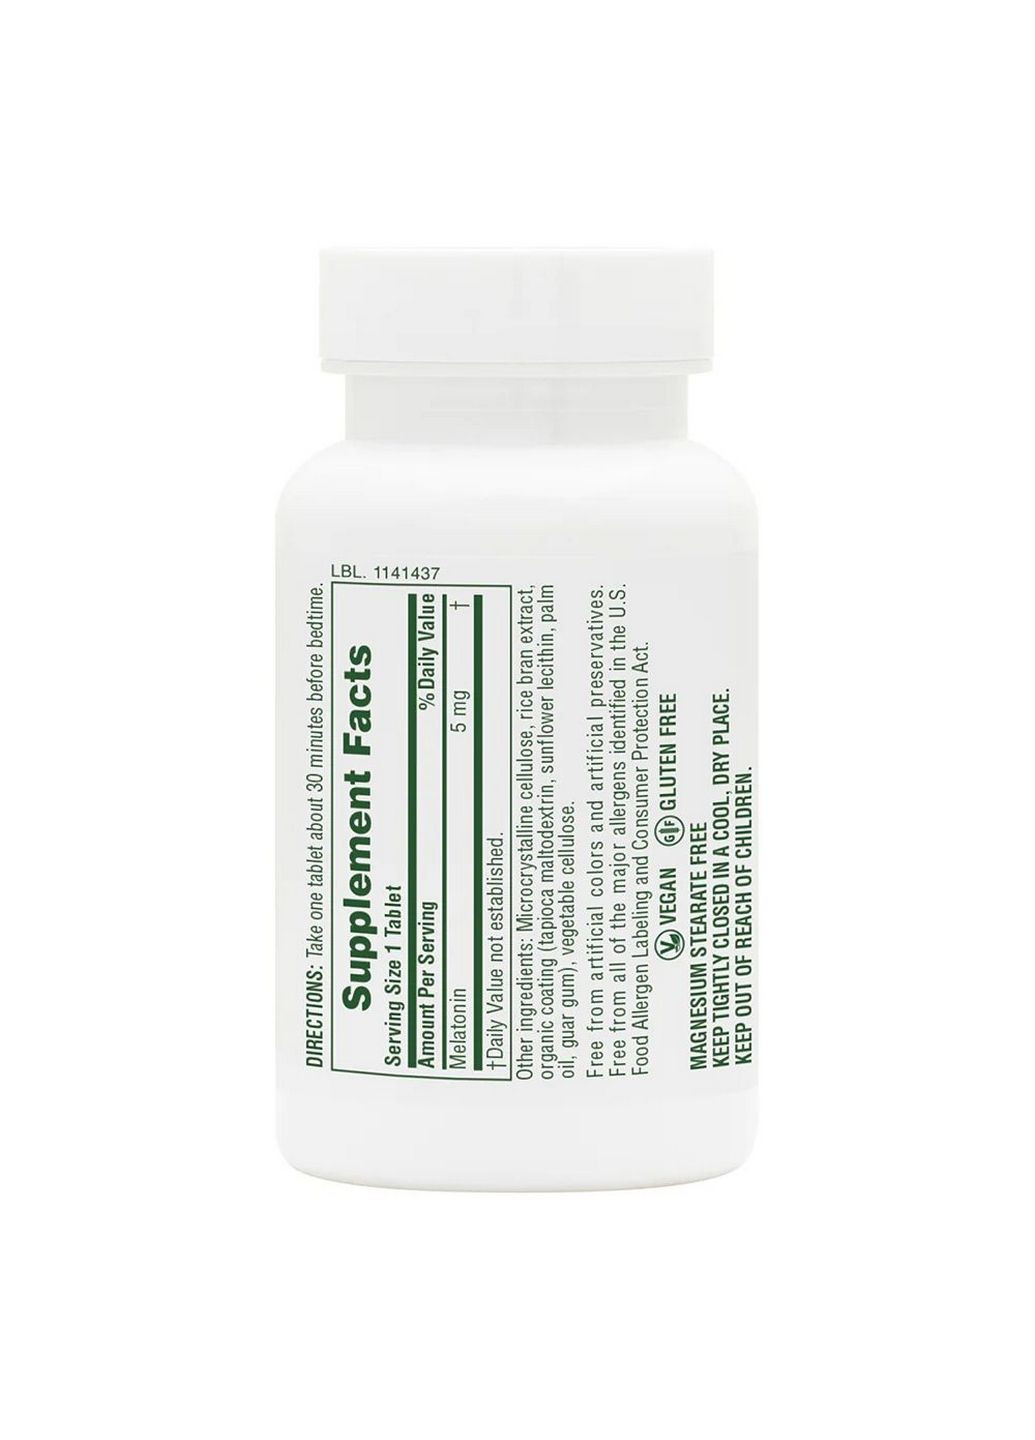 Натуральная добавка Fast Acting Melatonin 5 mg, 90 таблеток Natures Plus (293342940)